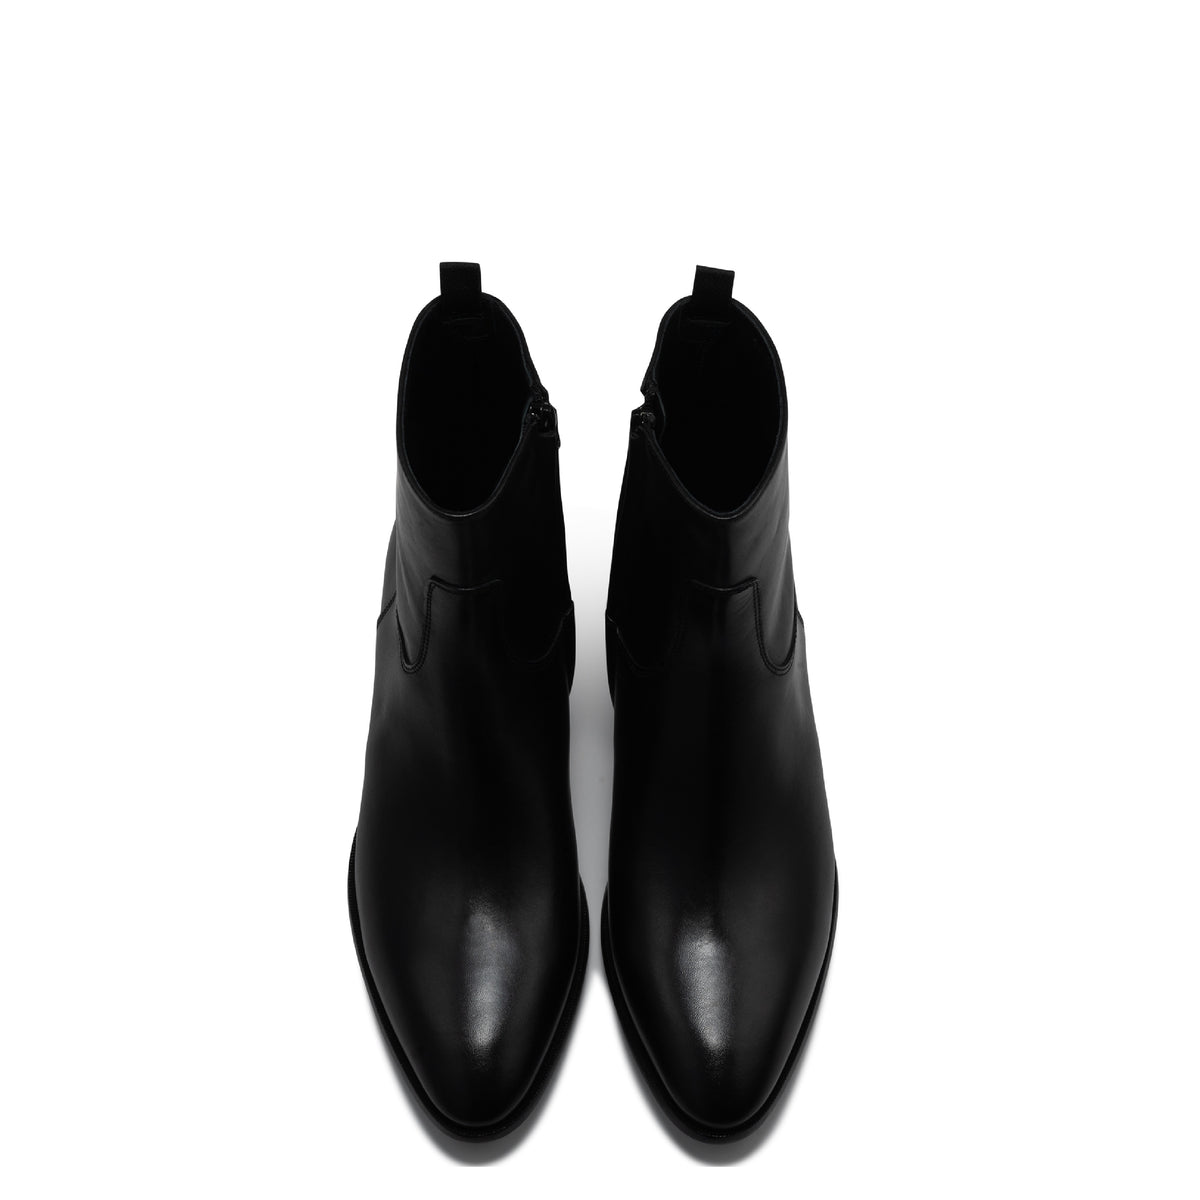 Slim Zipper Boot – Black Leather